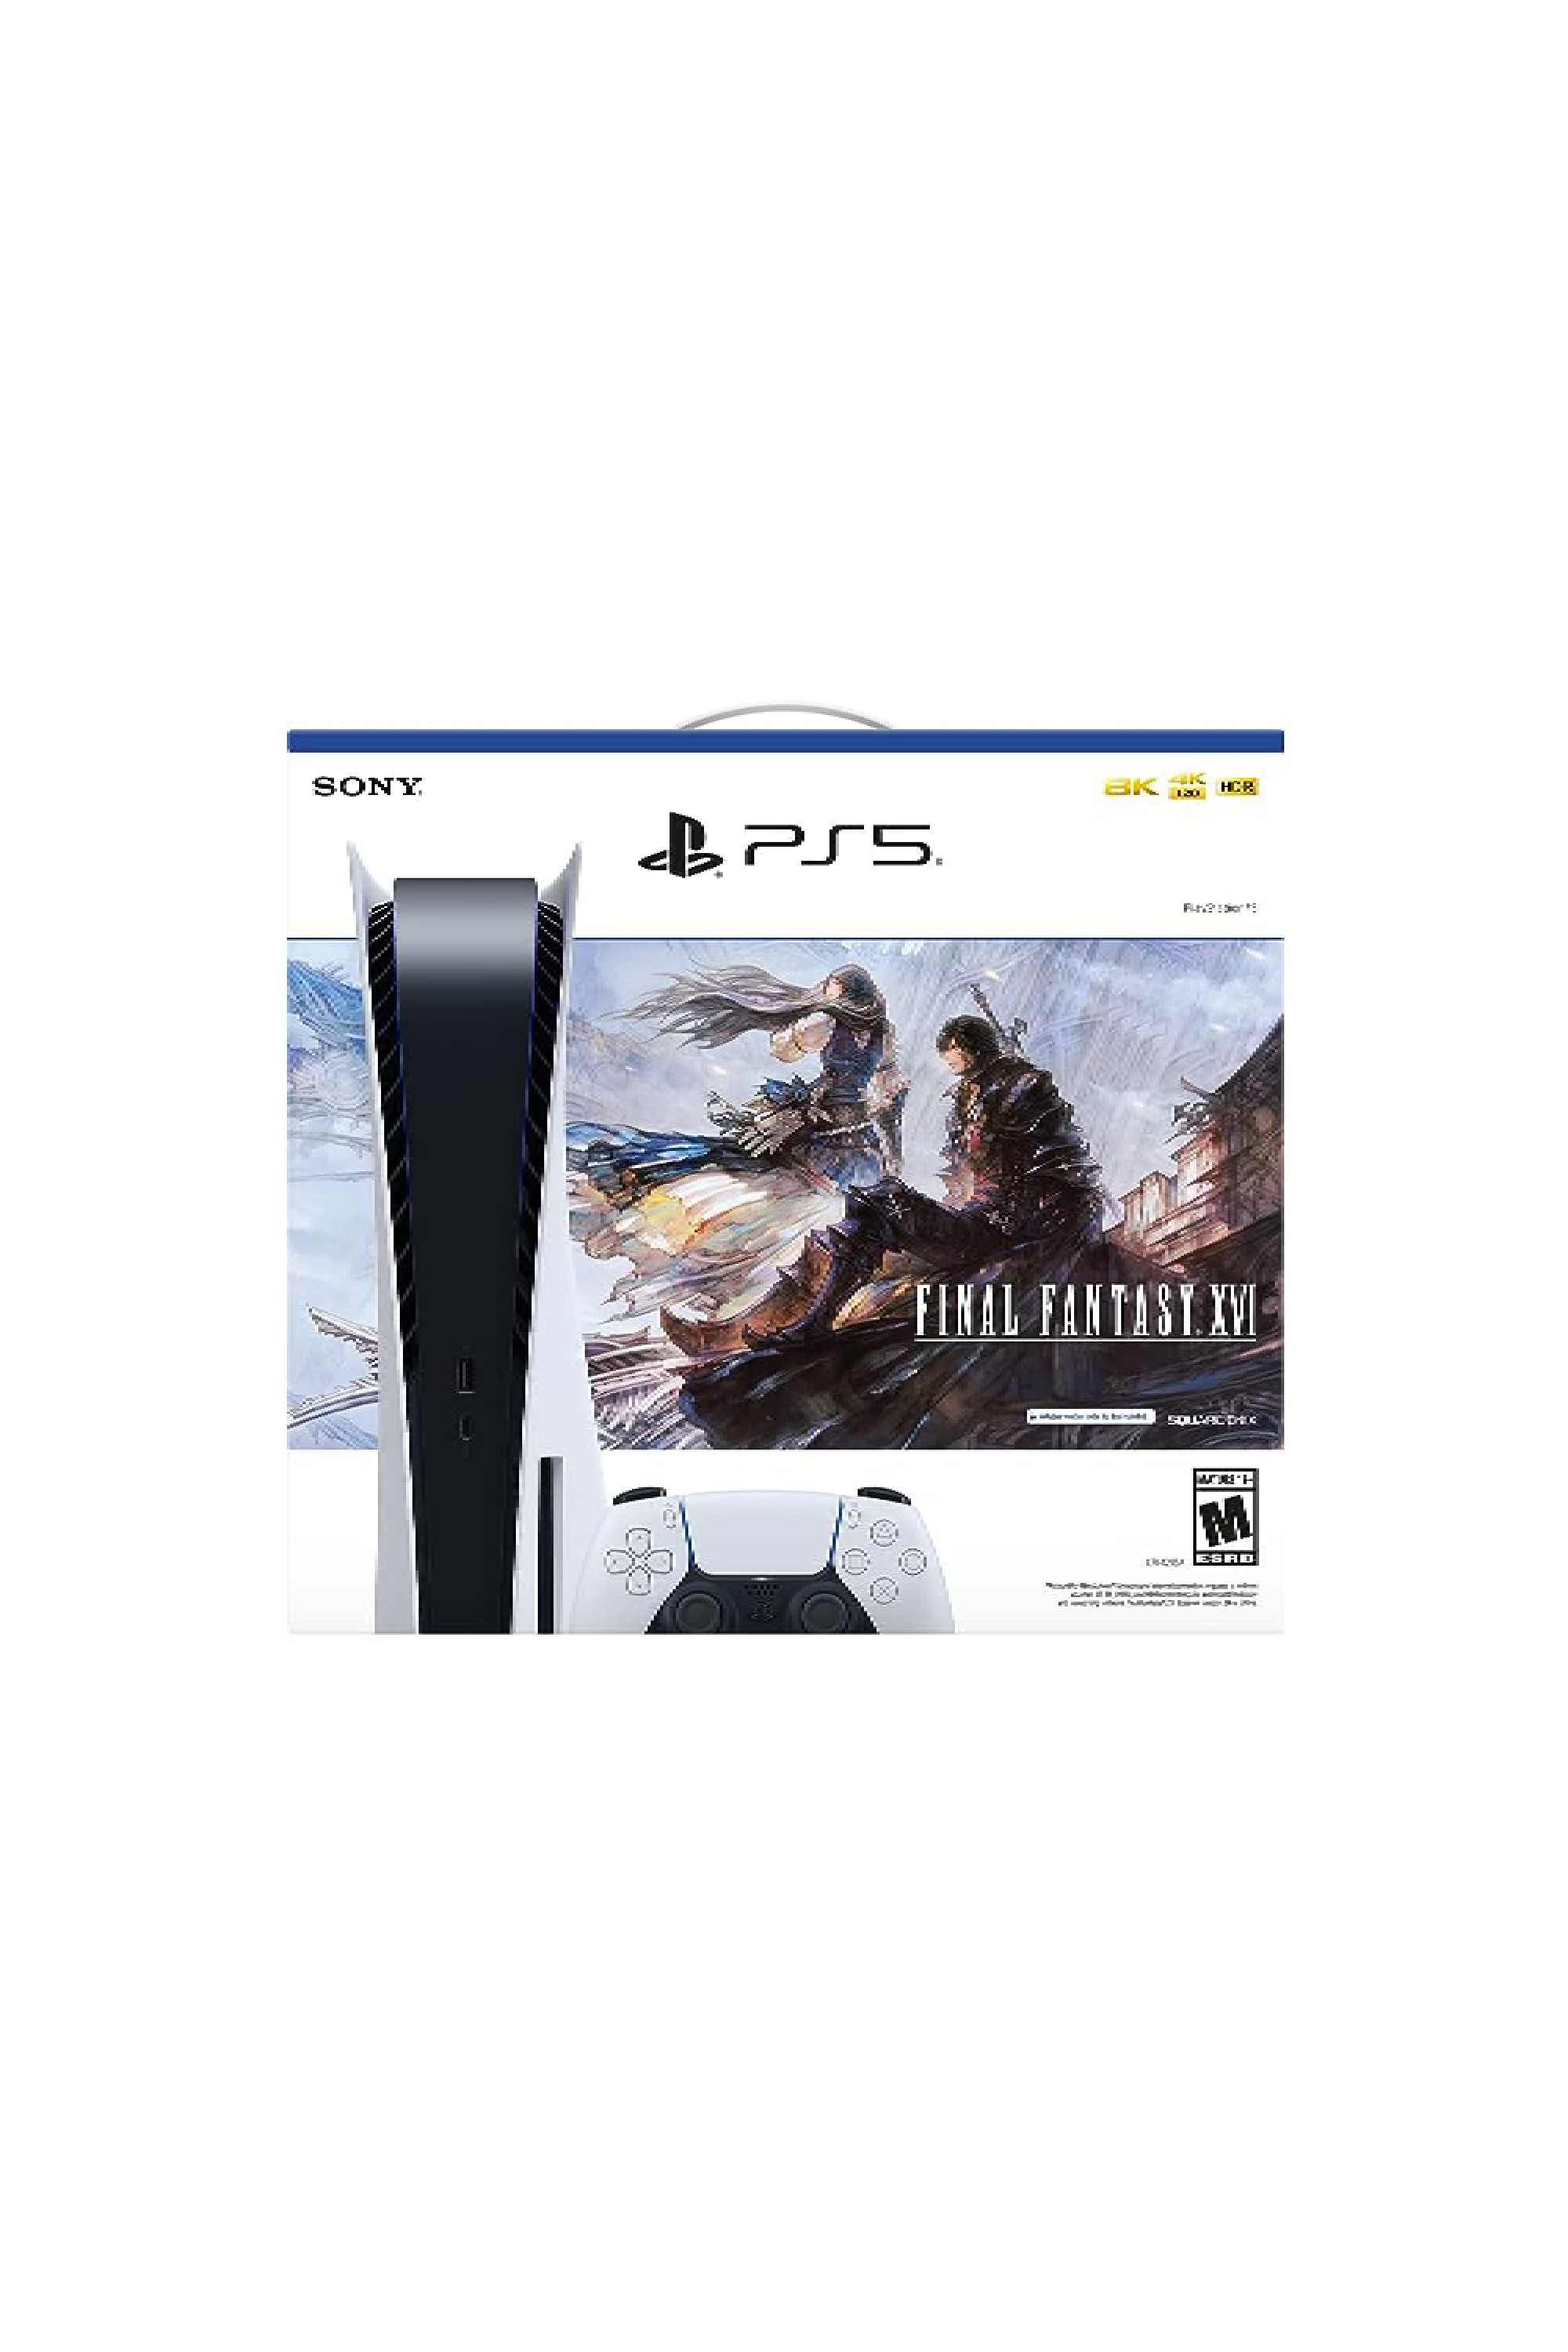 Special edition PlayStation 5 Final Fantasy XVI bundle coming to